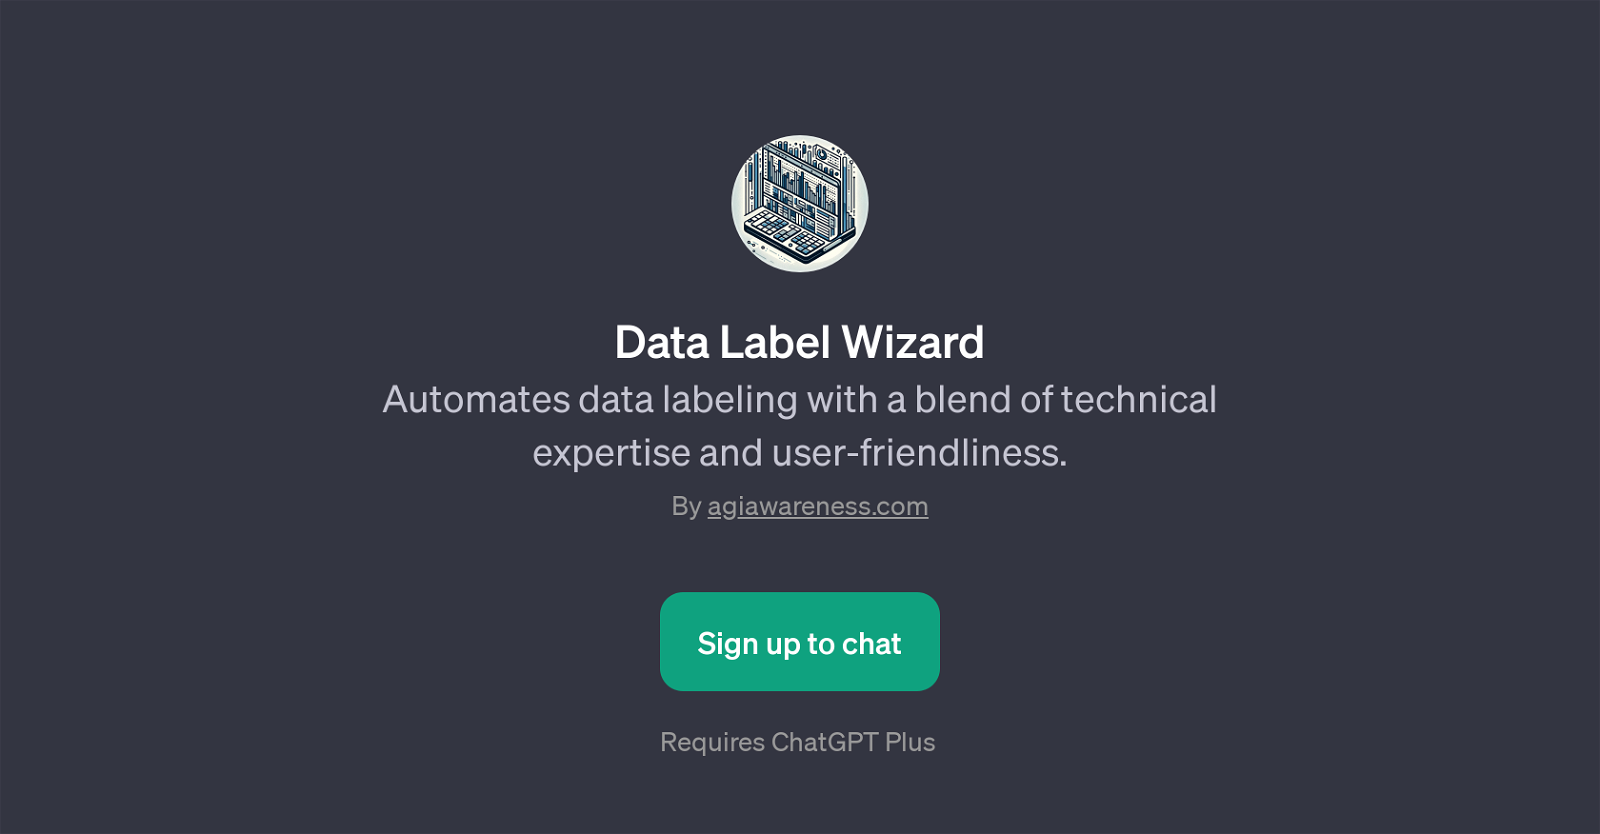 Data Label Wizard website